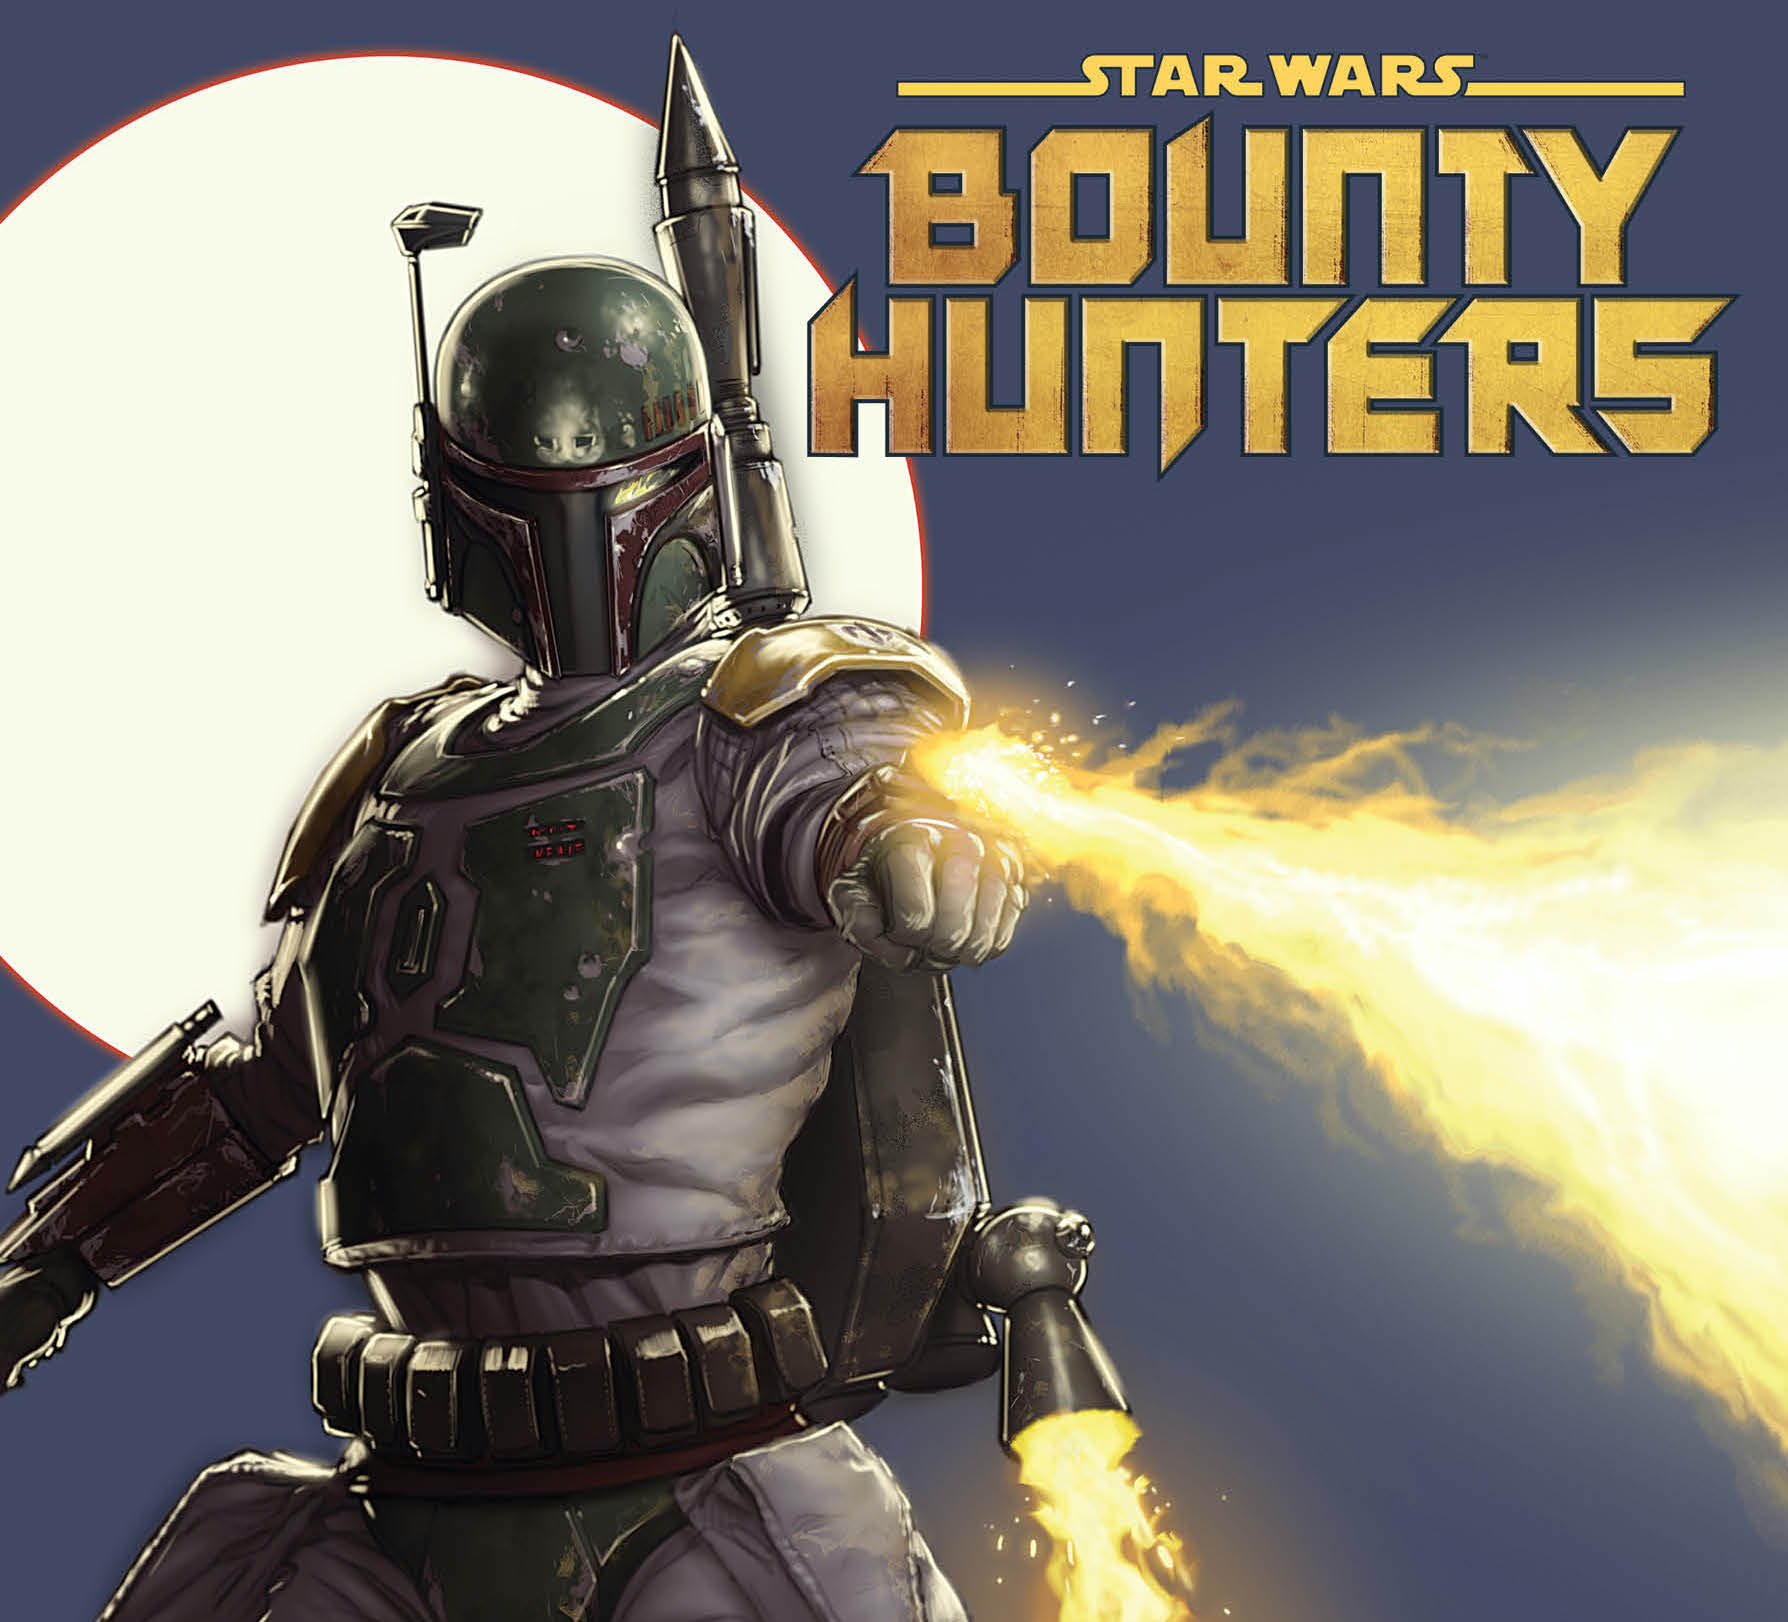 EXCLUSIVE Star Wars First Look: Bounty Hunters #1 variant by Kaare Andrews